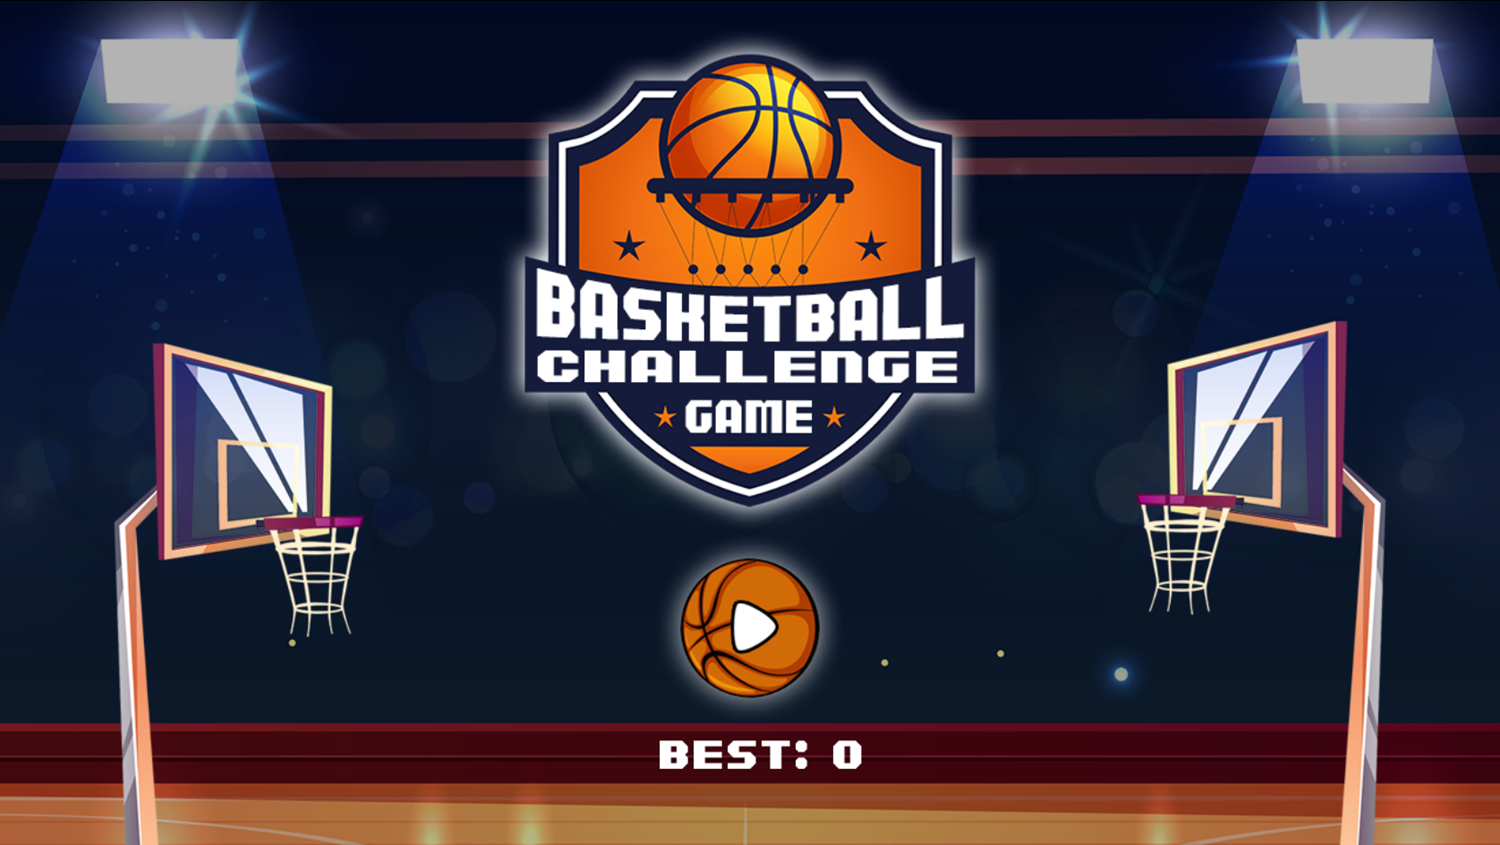 Basketball Challenge Game Welcome Screen Screenshot.